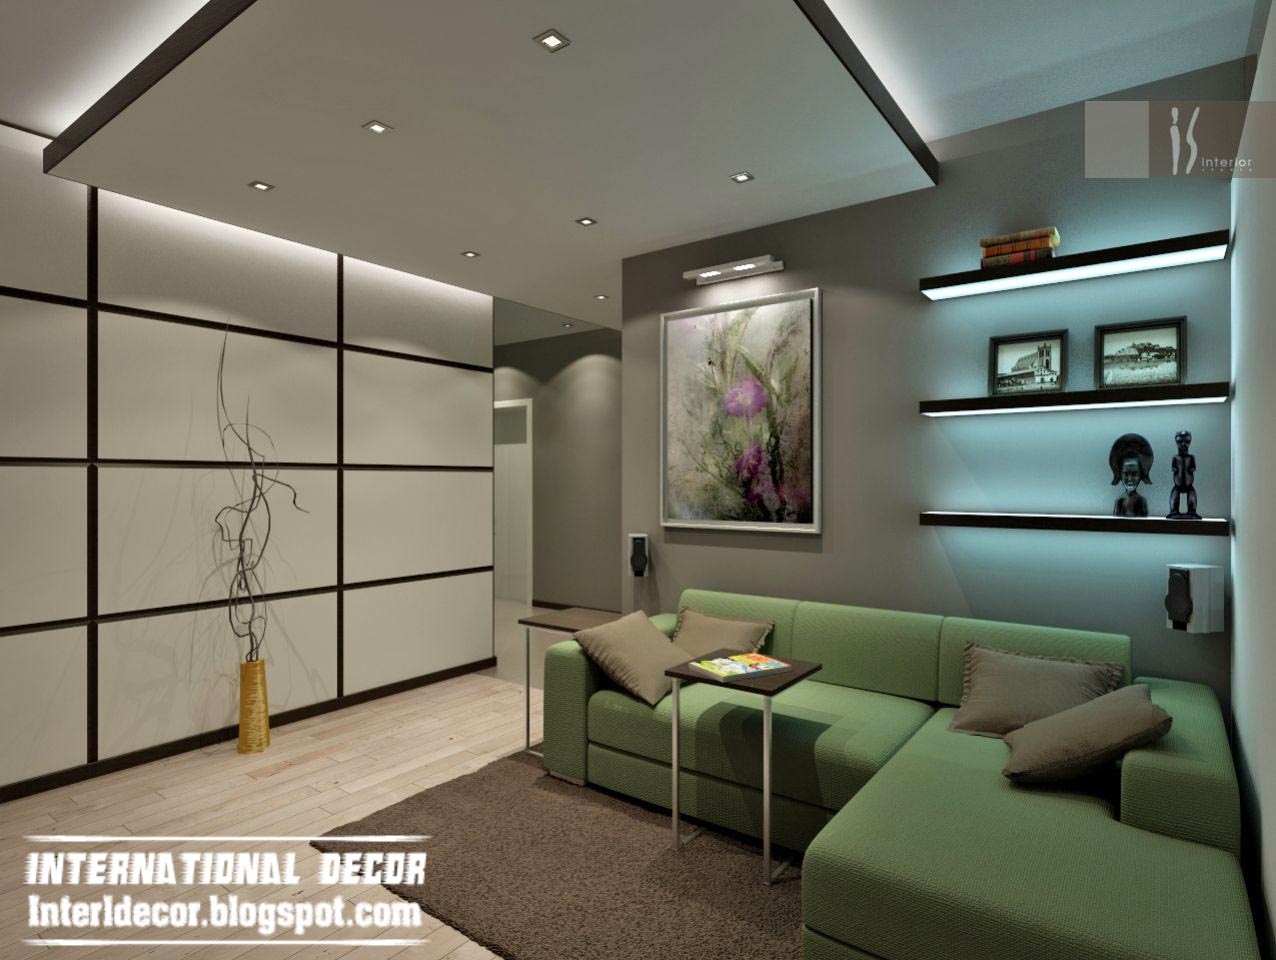 Top 10 Suspended Ceiling Tiles Lighting Pop Designs For Living Room